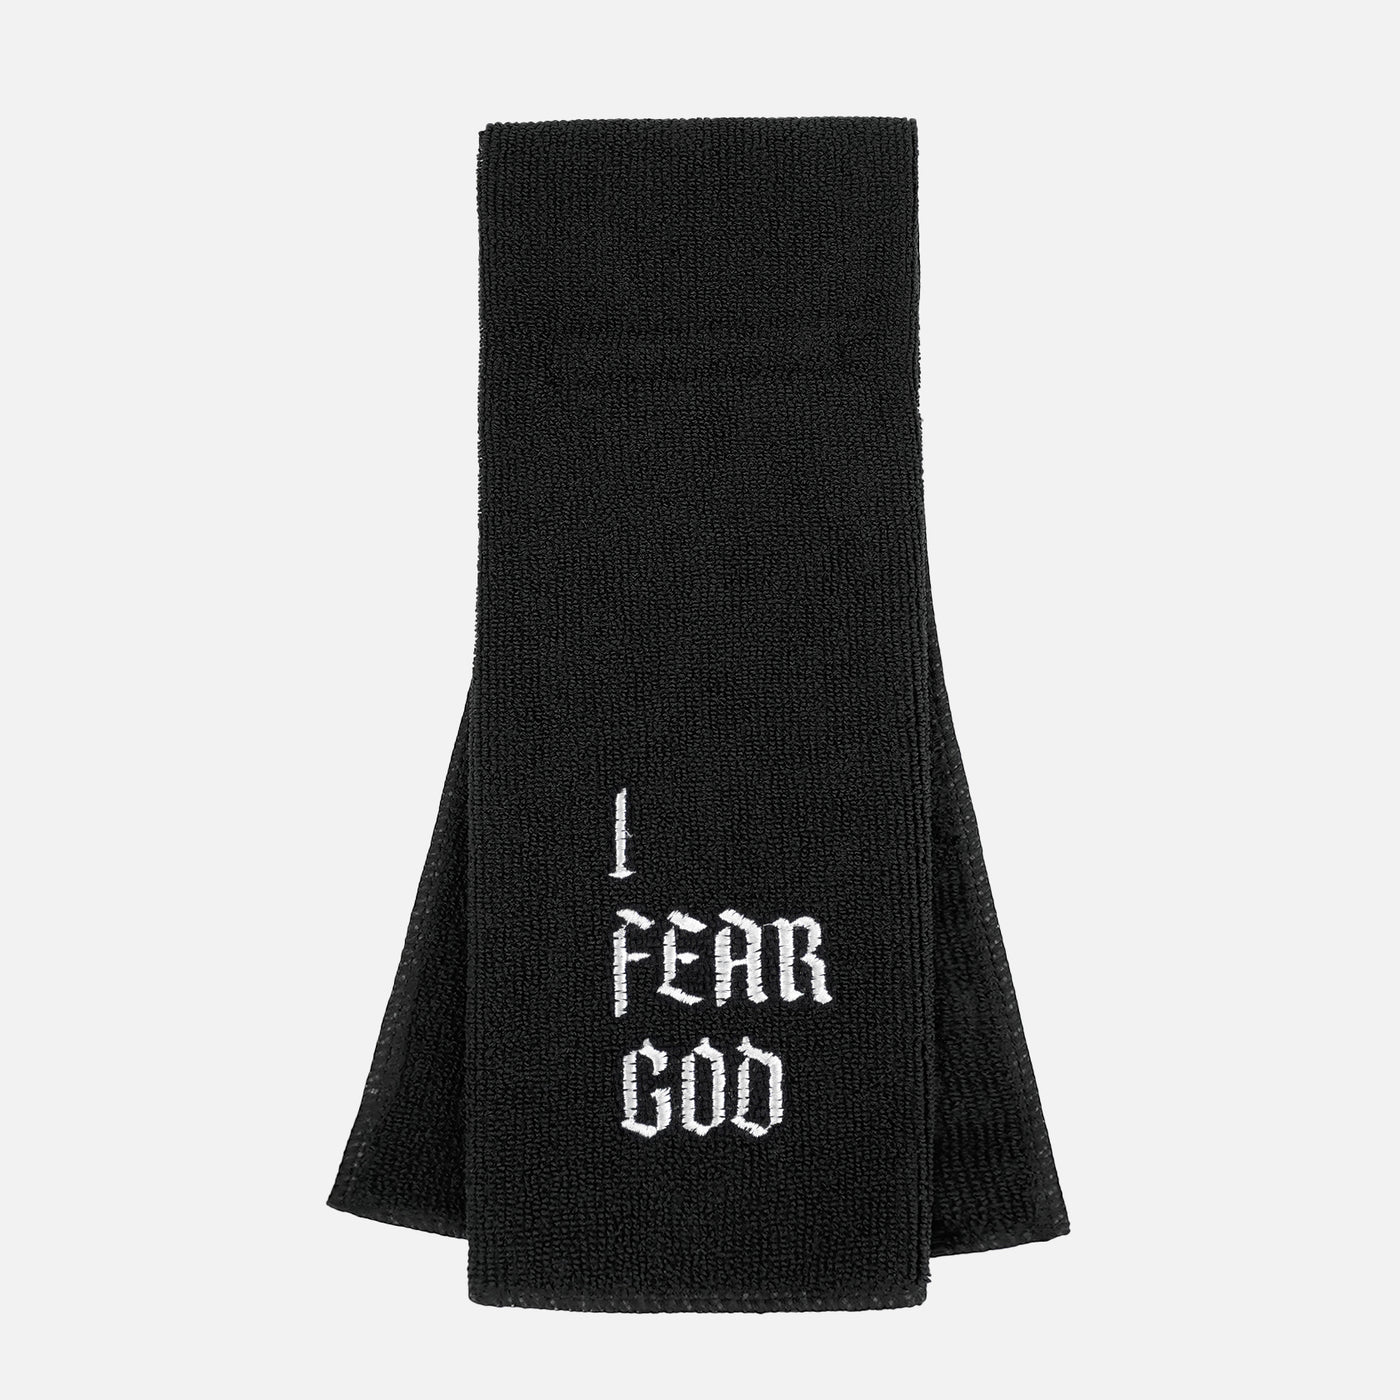 I Fear God Football Towel